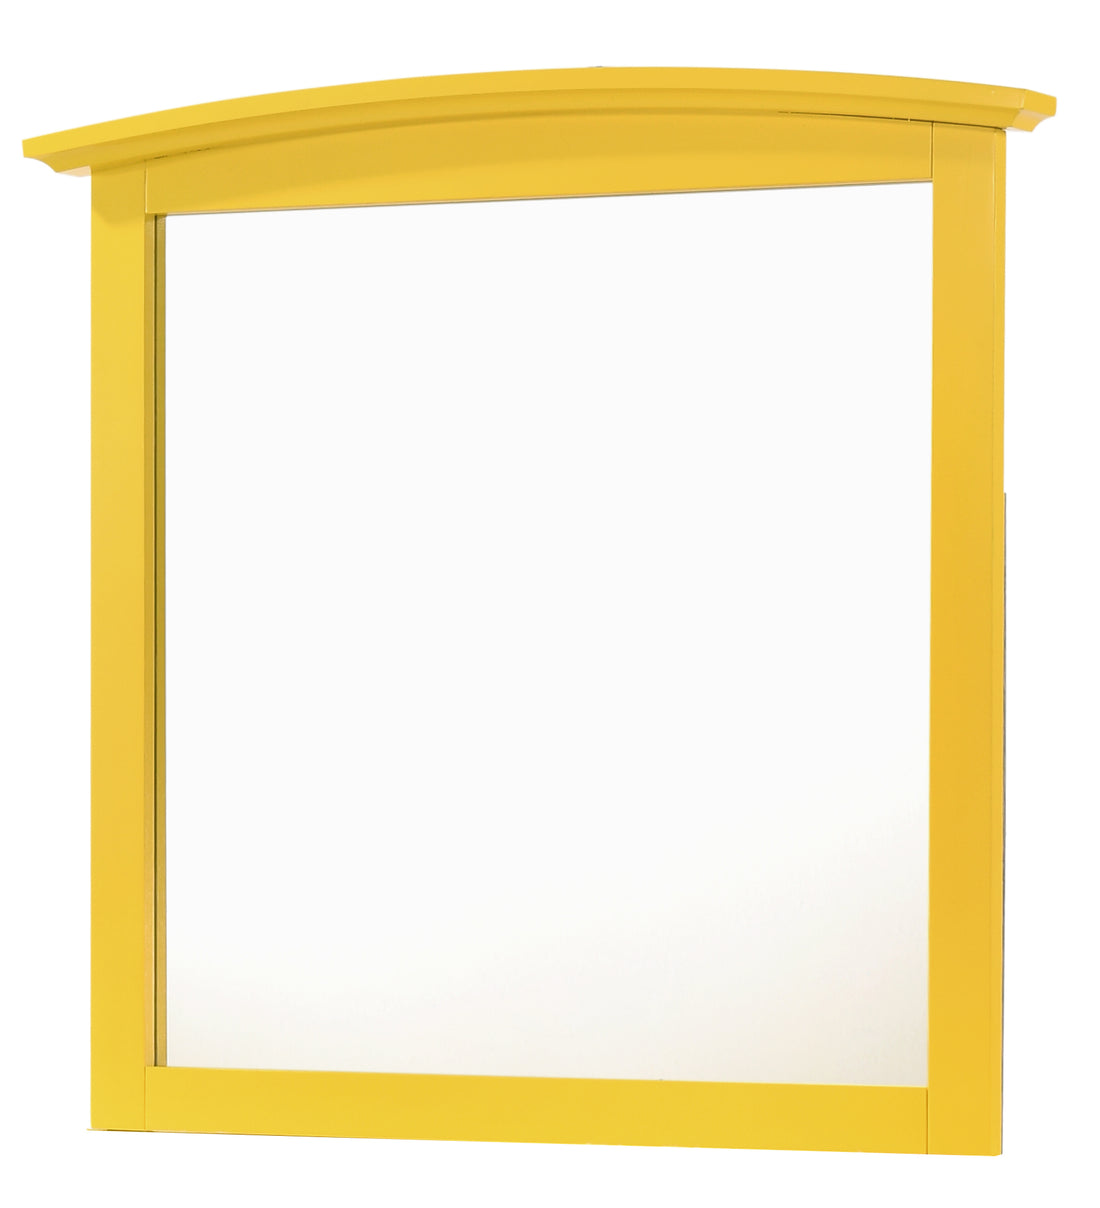 Hammond G5402 M Mirror , Yellow yellow-particle board